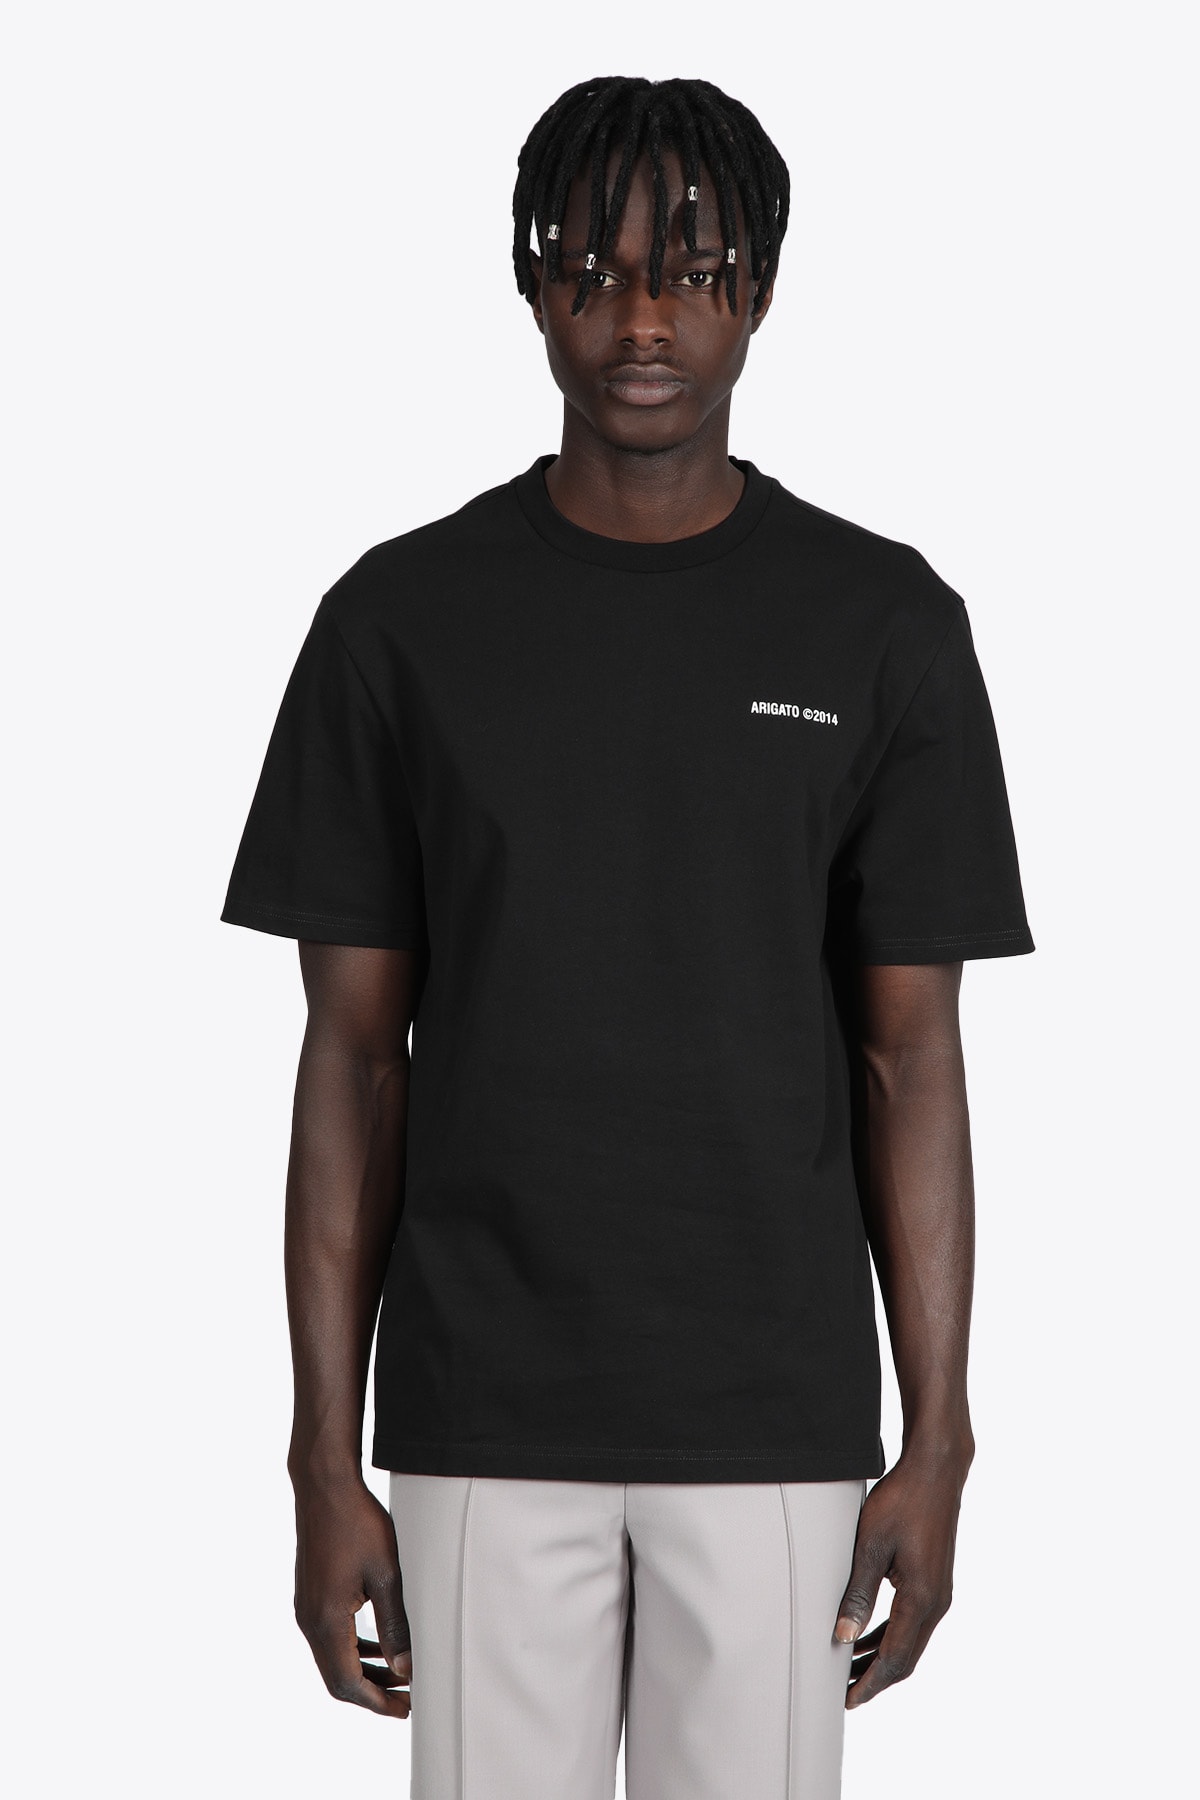 Axel Arigato London T-shirt Black cotton t-shirt with chest logo - London T-shirt